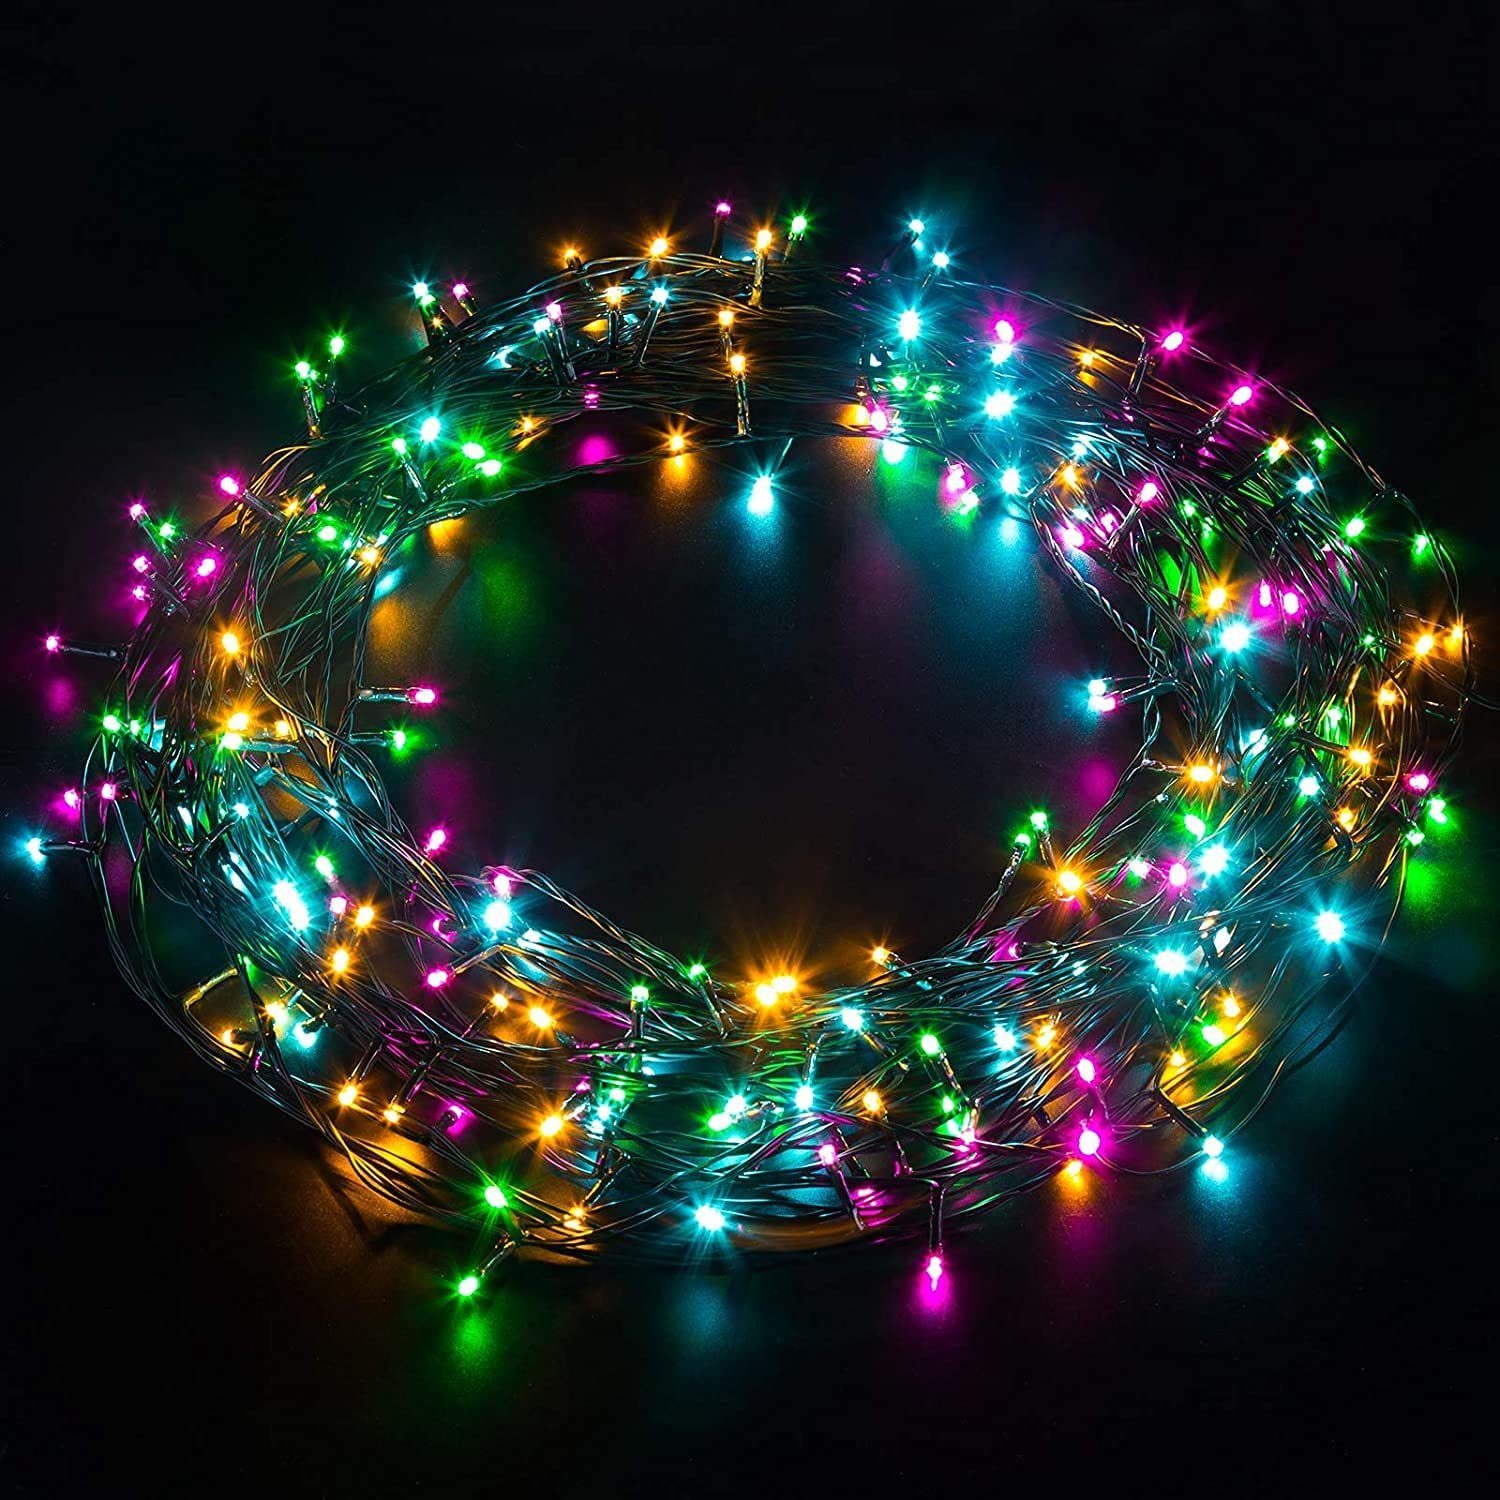 Elegear LED-Lichterkette »Bunt LED Lichterkette Außen 100M 1000 LEDs  Weihnachtsbeleuchtung«, 200-flammig, 20M 200LEDs Lichterkette für  Weihnachten online kaufen | OTTO